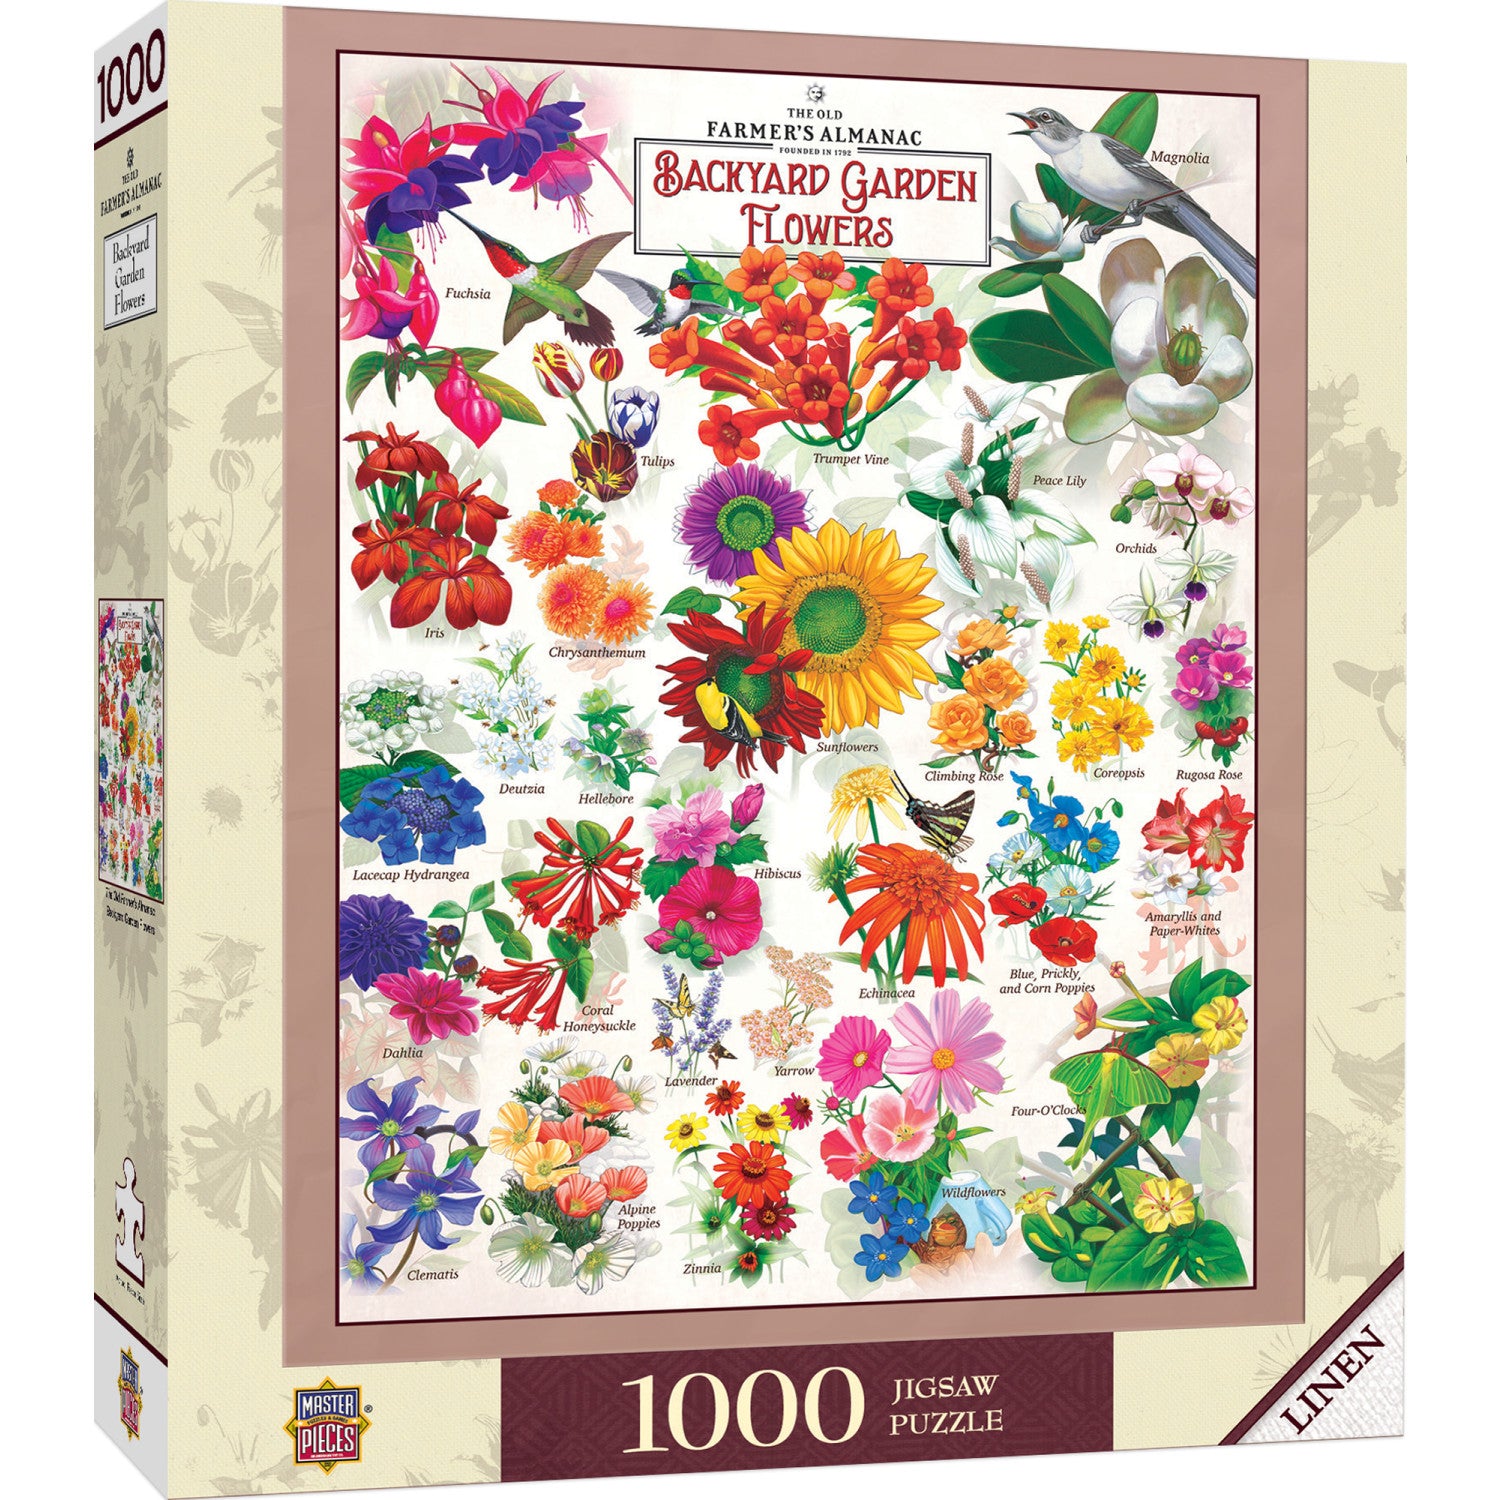 Farmer's Almanac - Backyard Garden Flowers 1000 Piece Jigsaw Puzzle